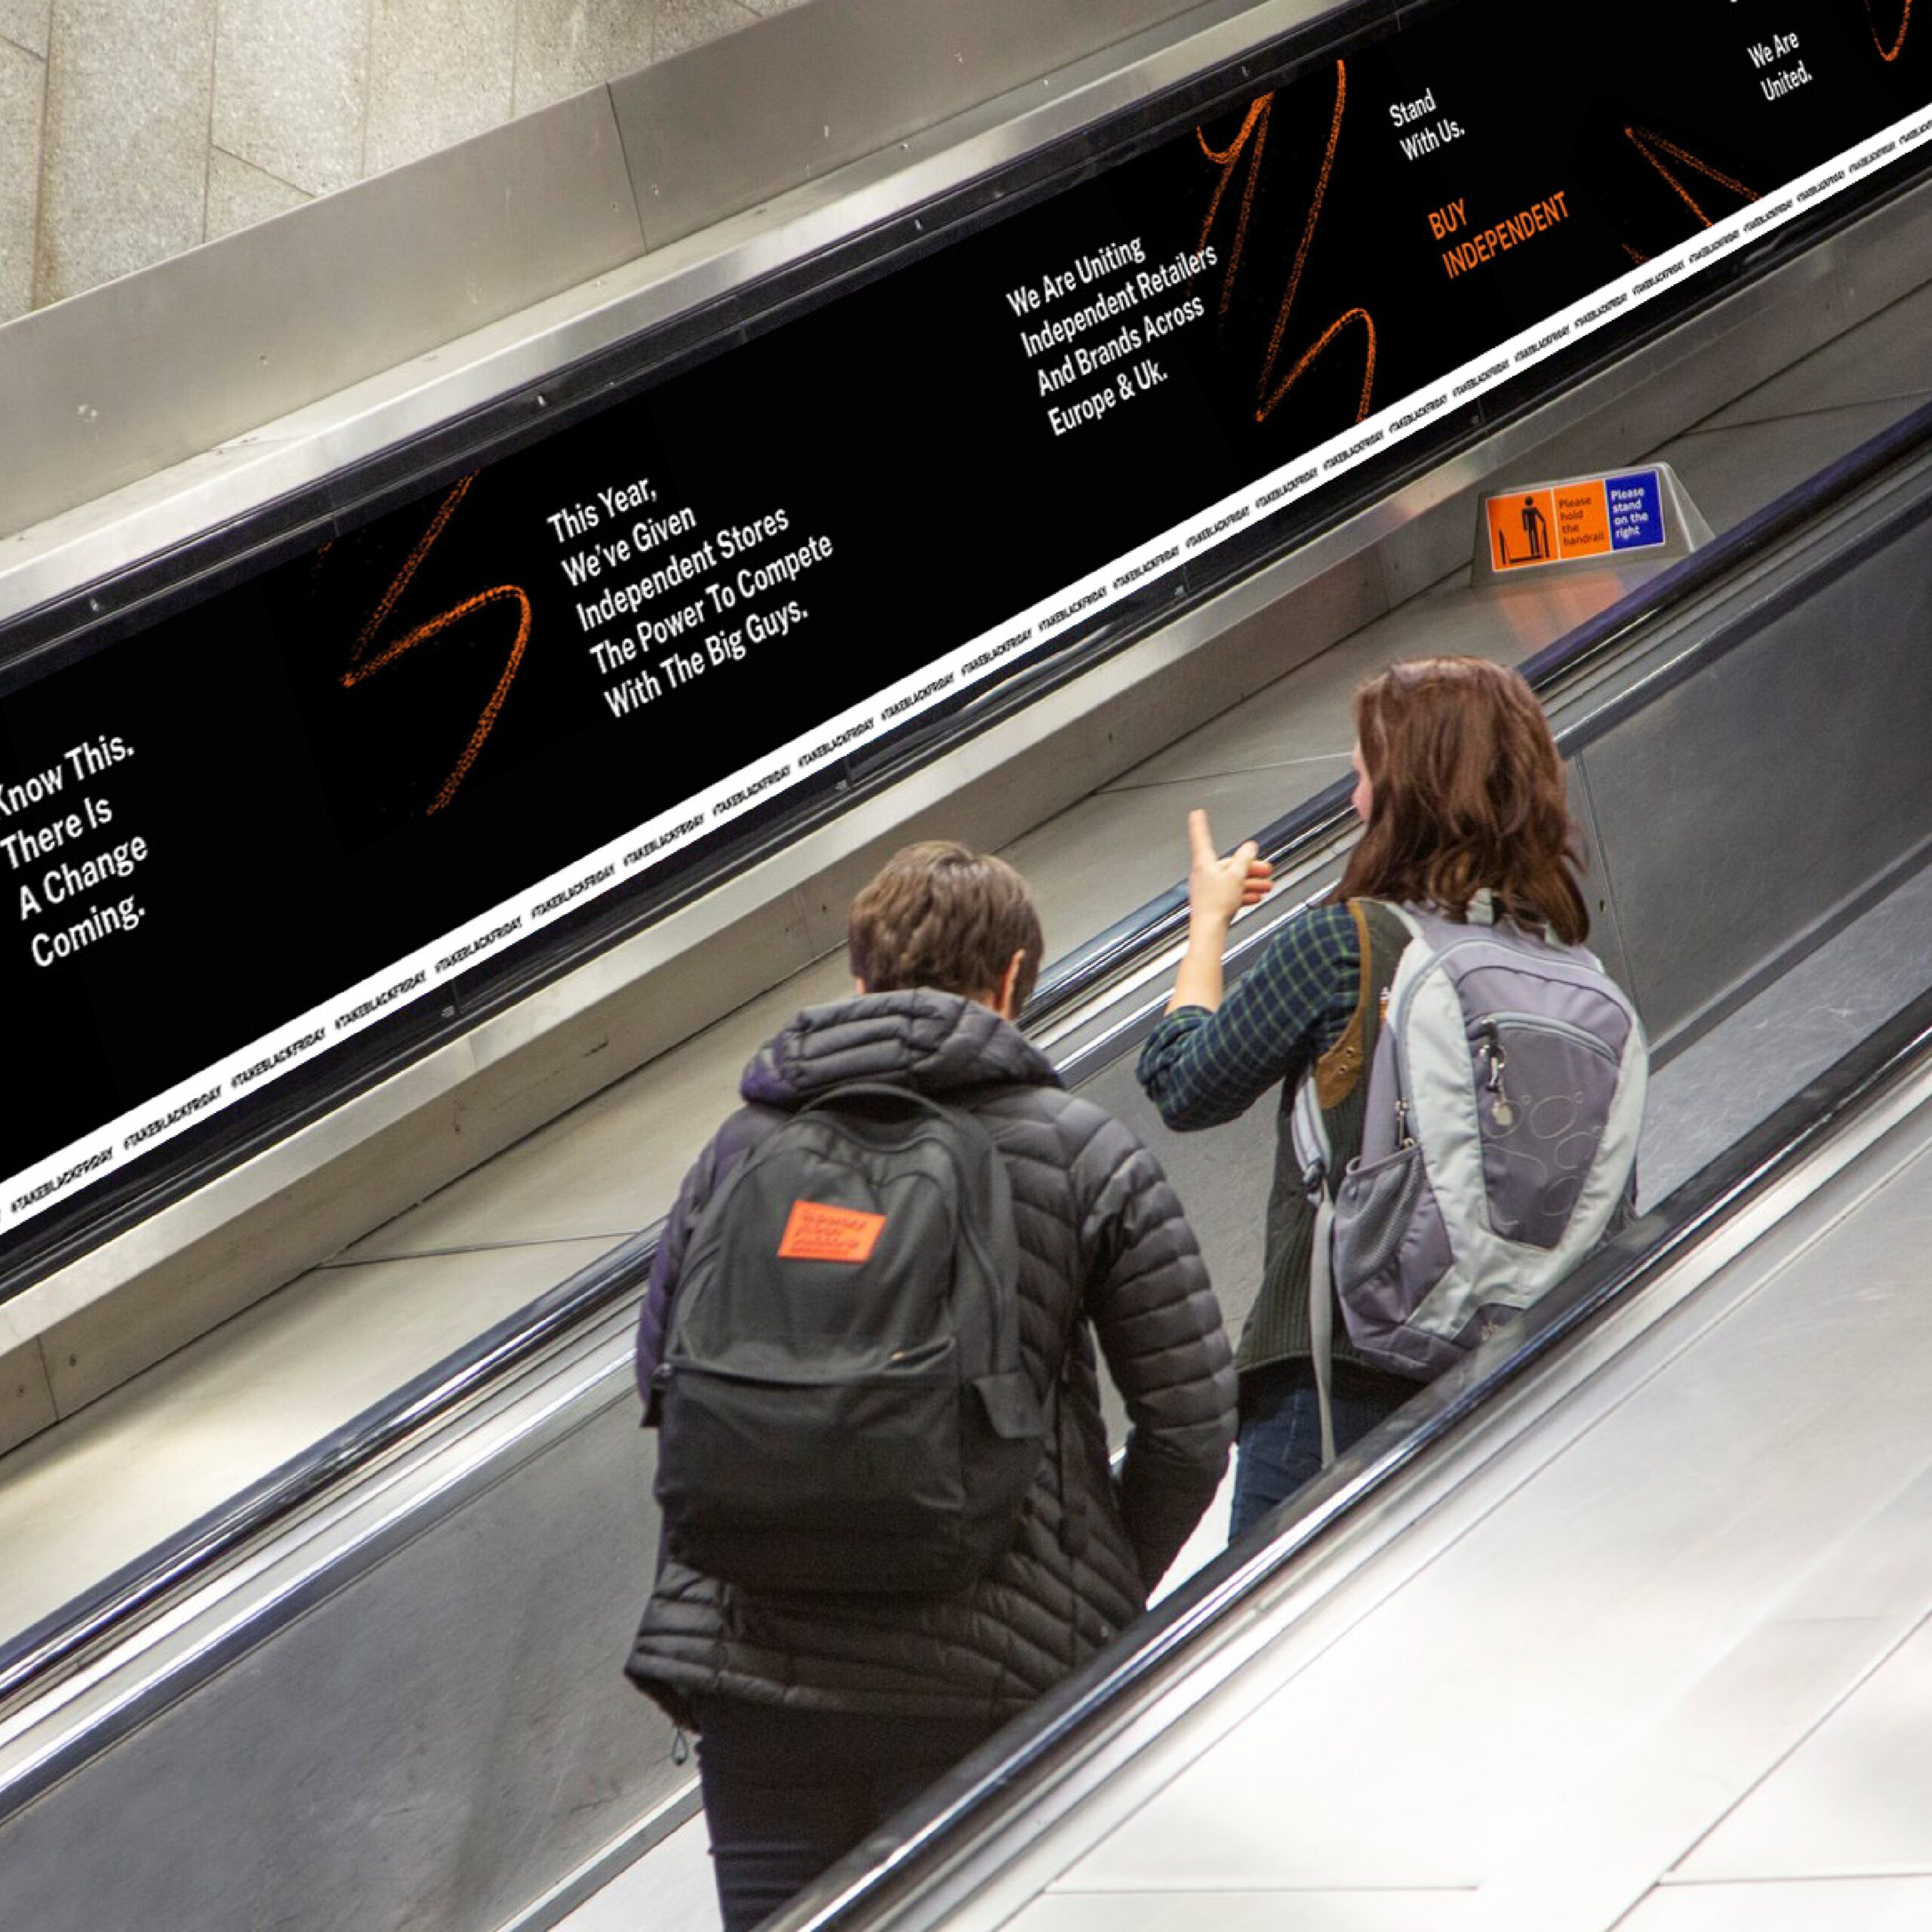 advertisement on escalator screens